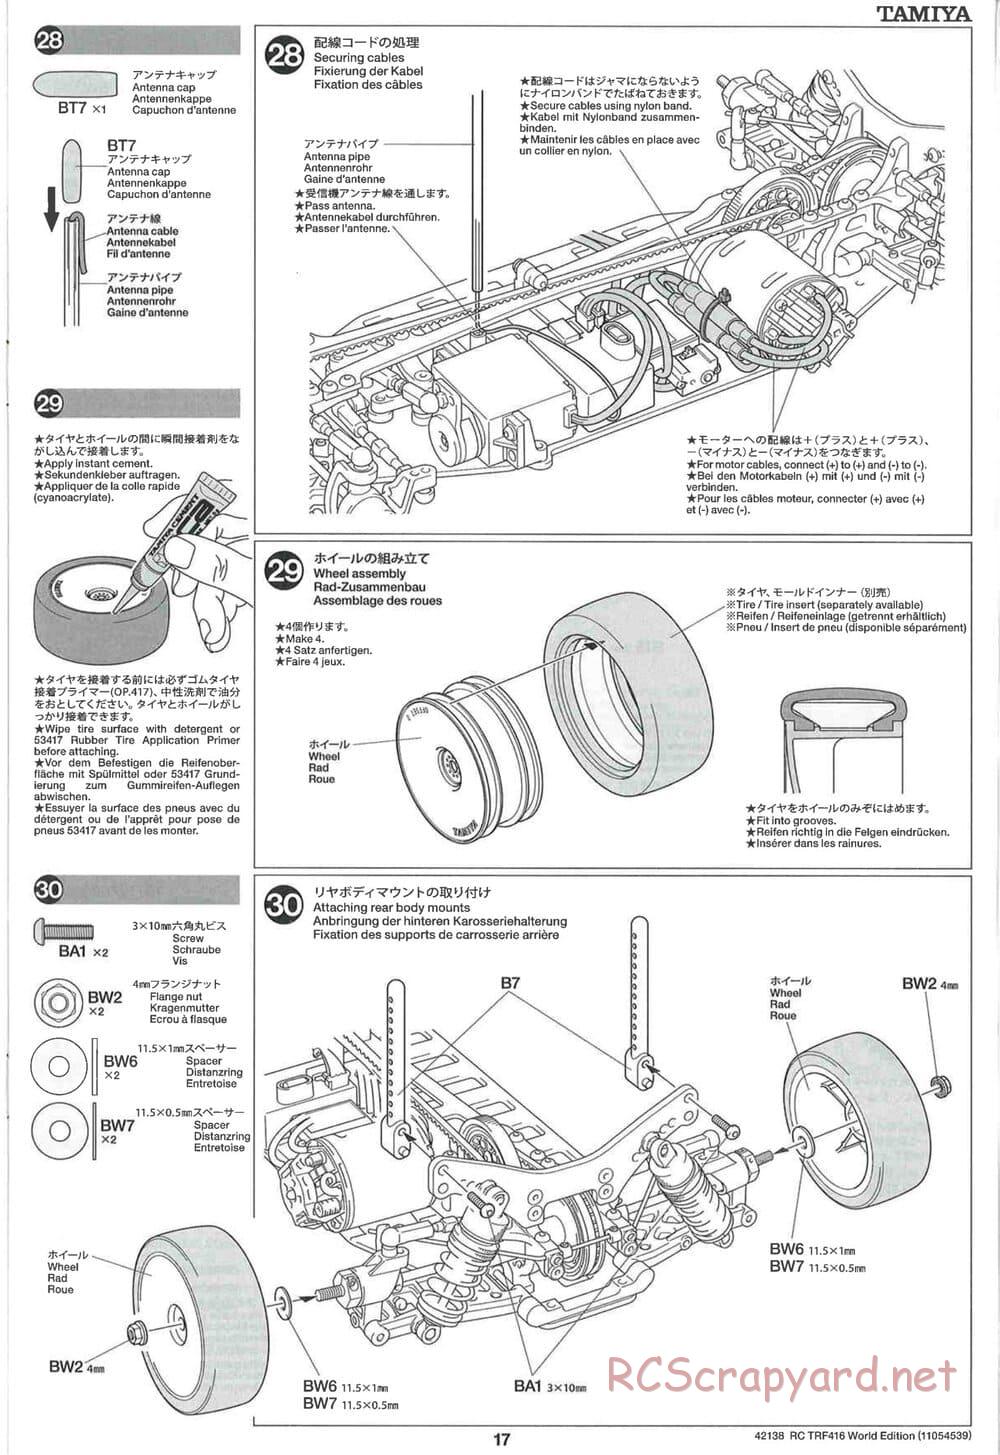 Tamiya - TRF416 World Edition Chassis - Manual - Page 17